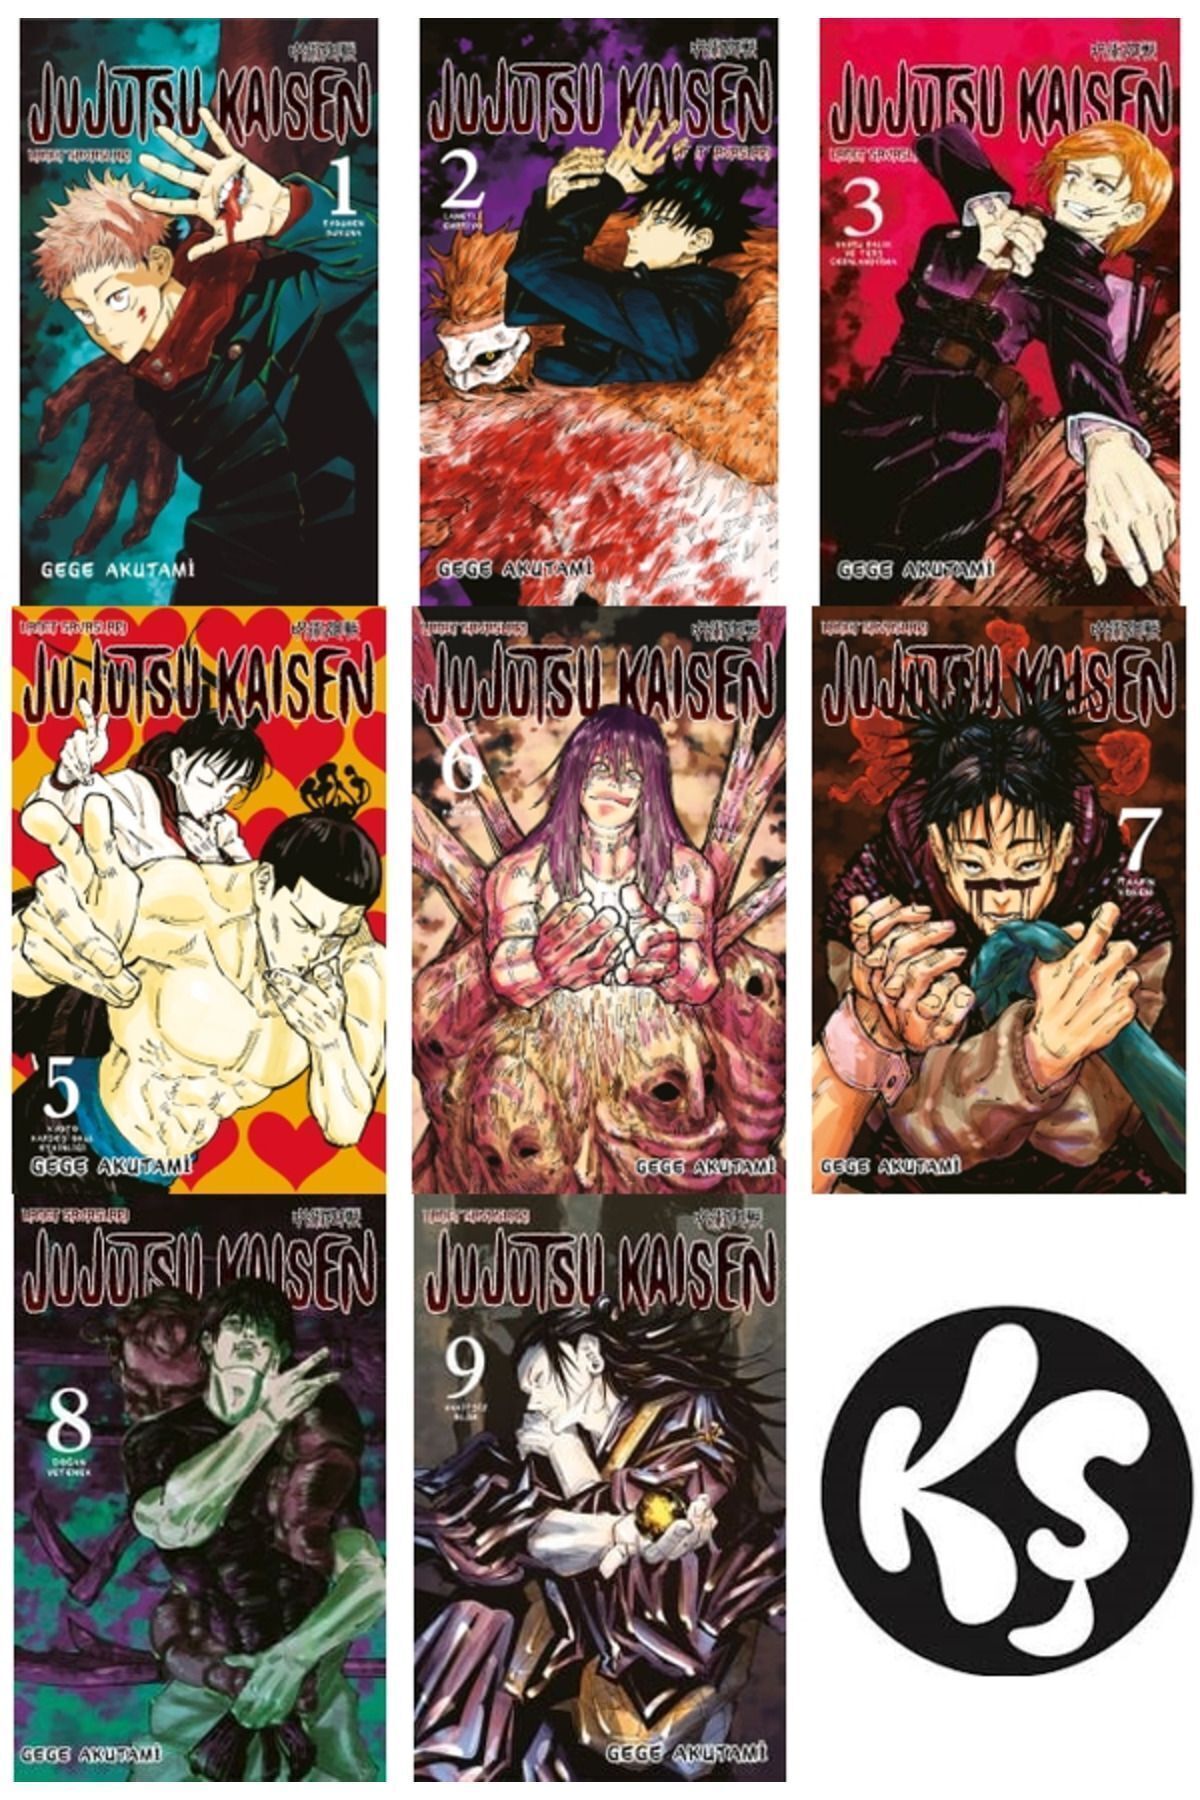 Gerekli Şeyler Yayıncılık Jujutsu Kaisen 1-2-3-5-6-7-8-9 manga seti (8 kitap)